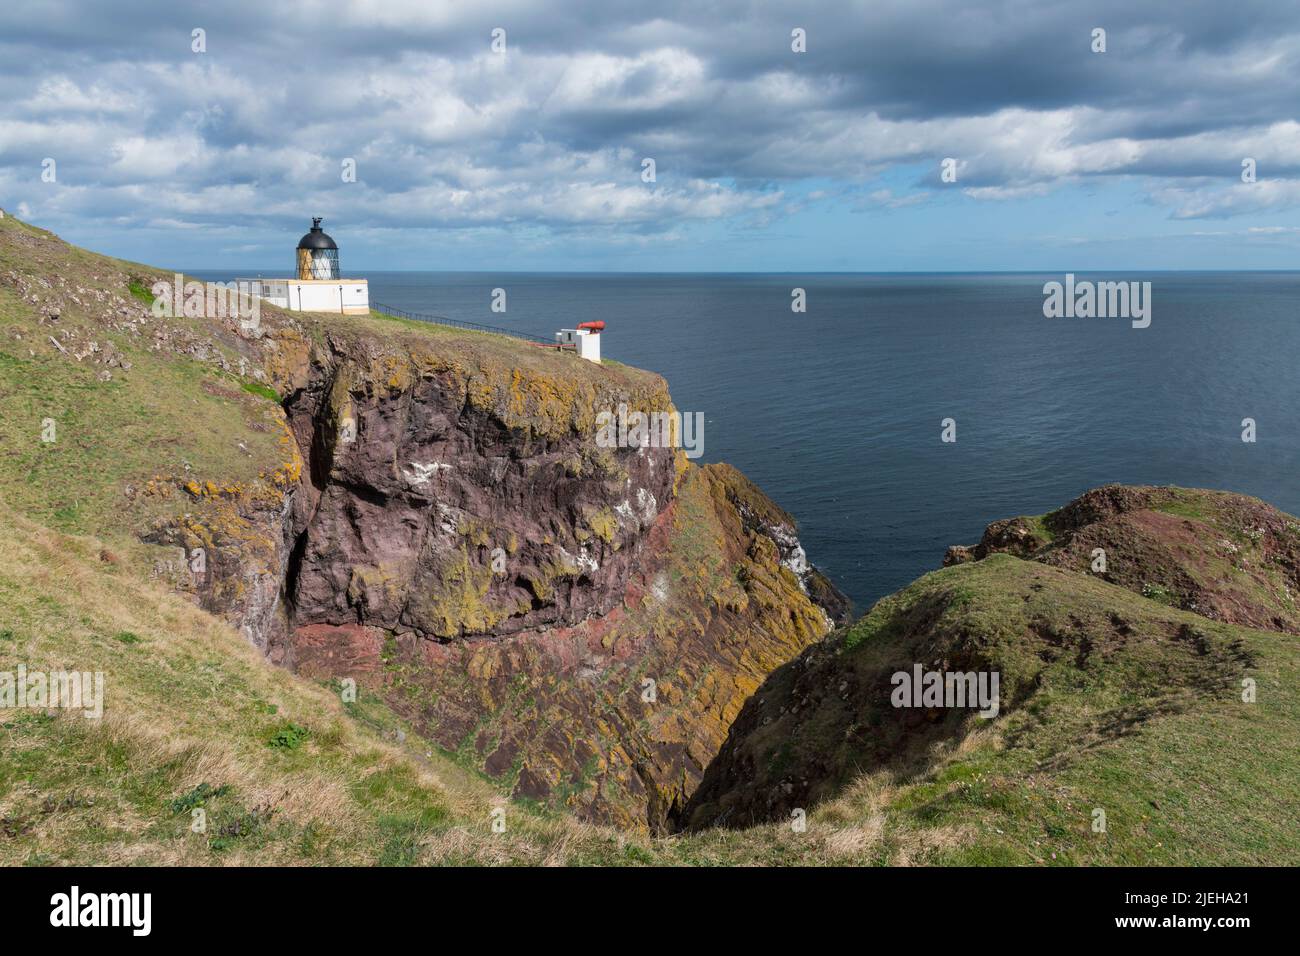 St Abbs Head lighthouse, Berwickshire, Scotland Stock Photo